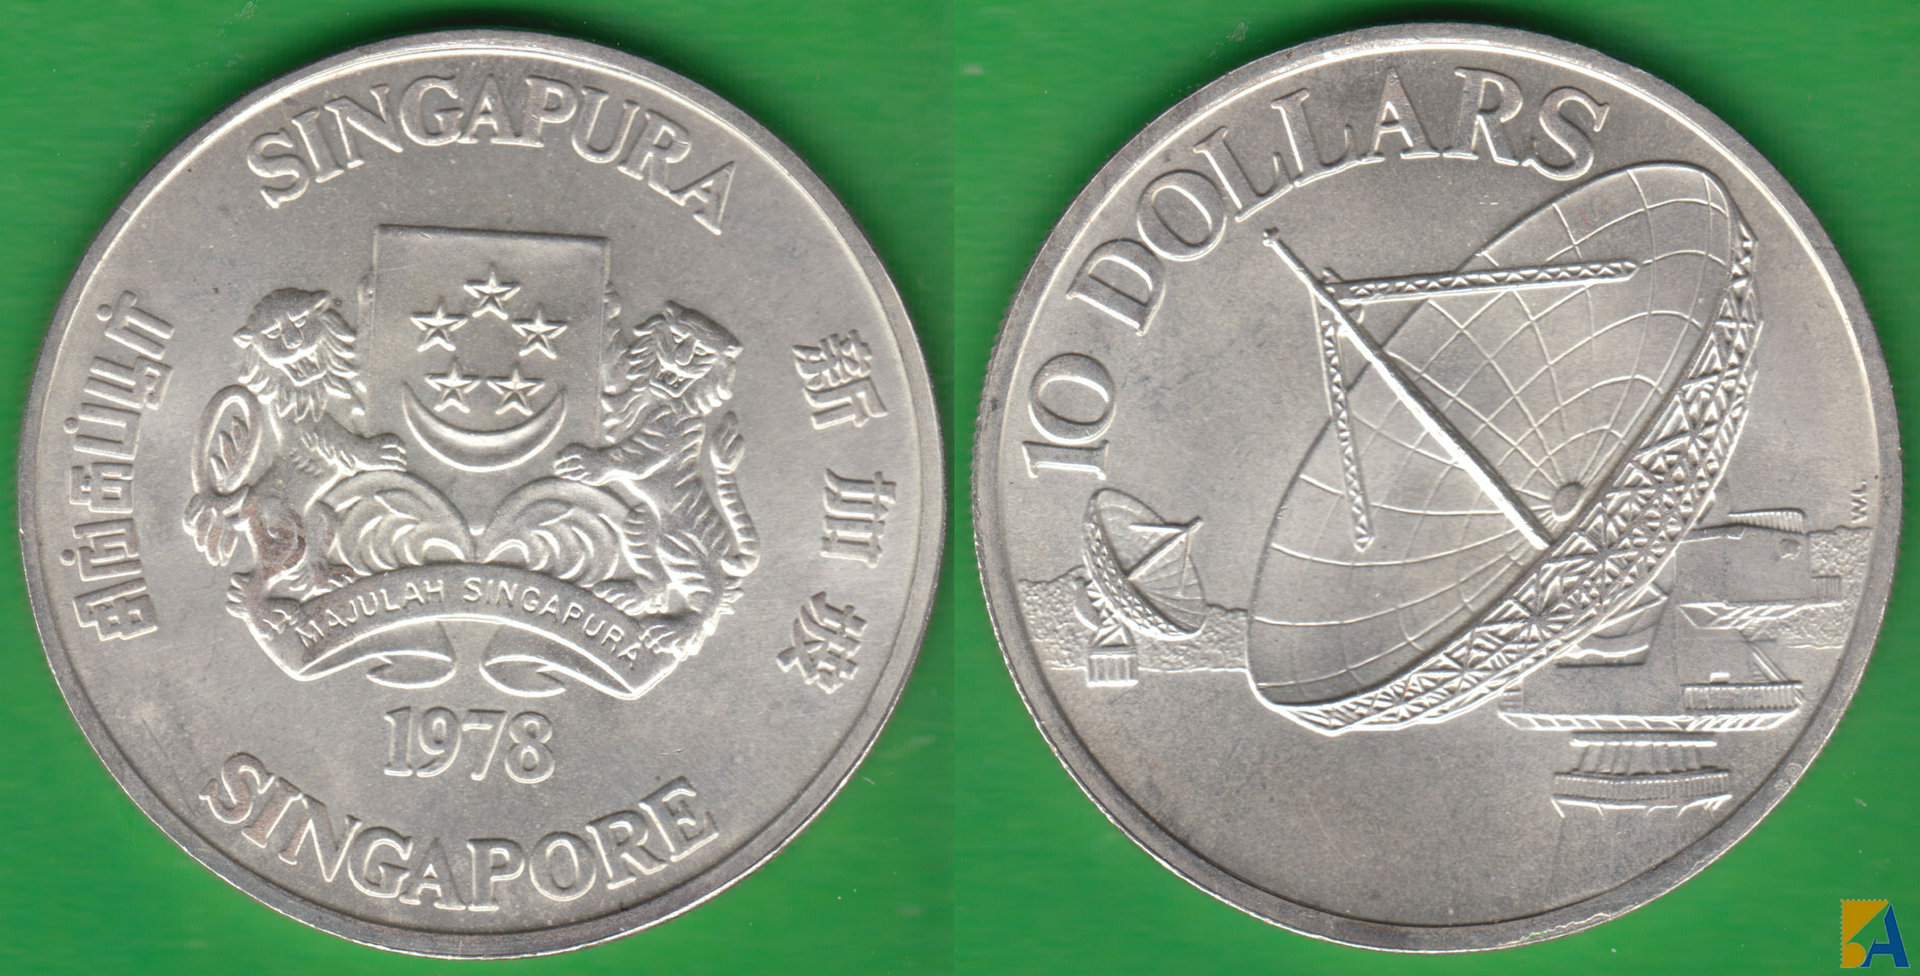 SINGAPUR - SINGAPORE. 10 DOLARES (DOLLARS) DE 1978. PLATA 0.500. (2)